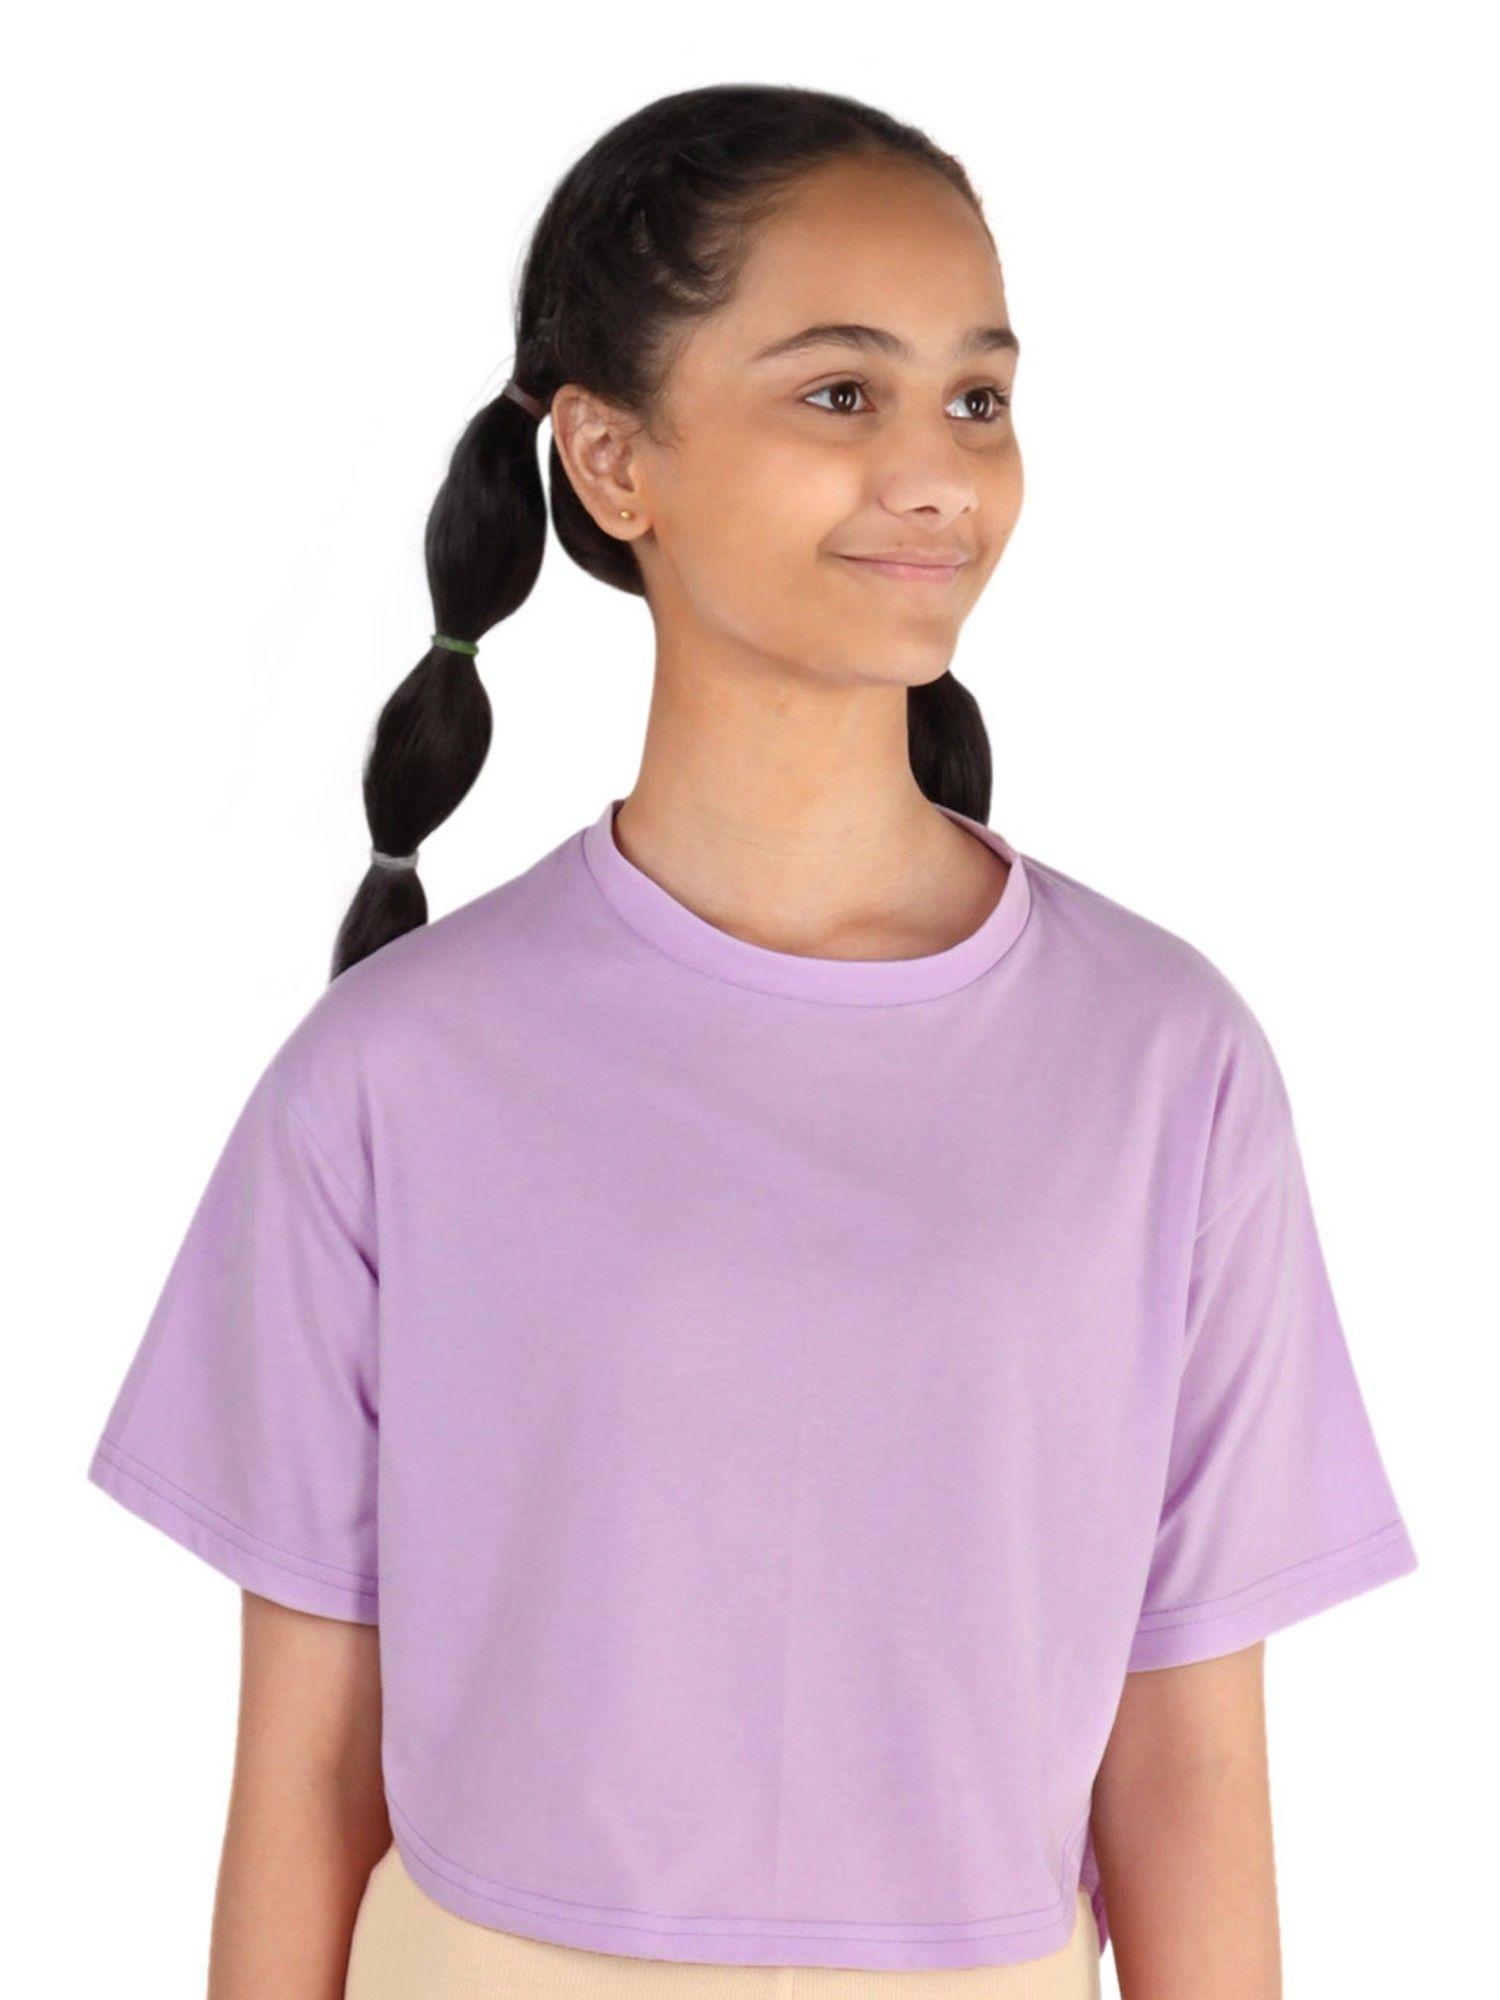 girls-purple-t-shirt-solid-plain